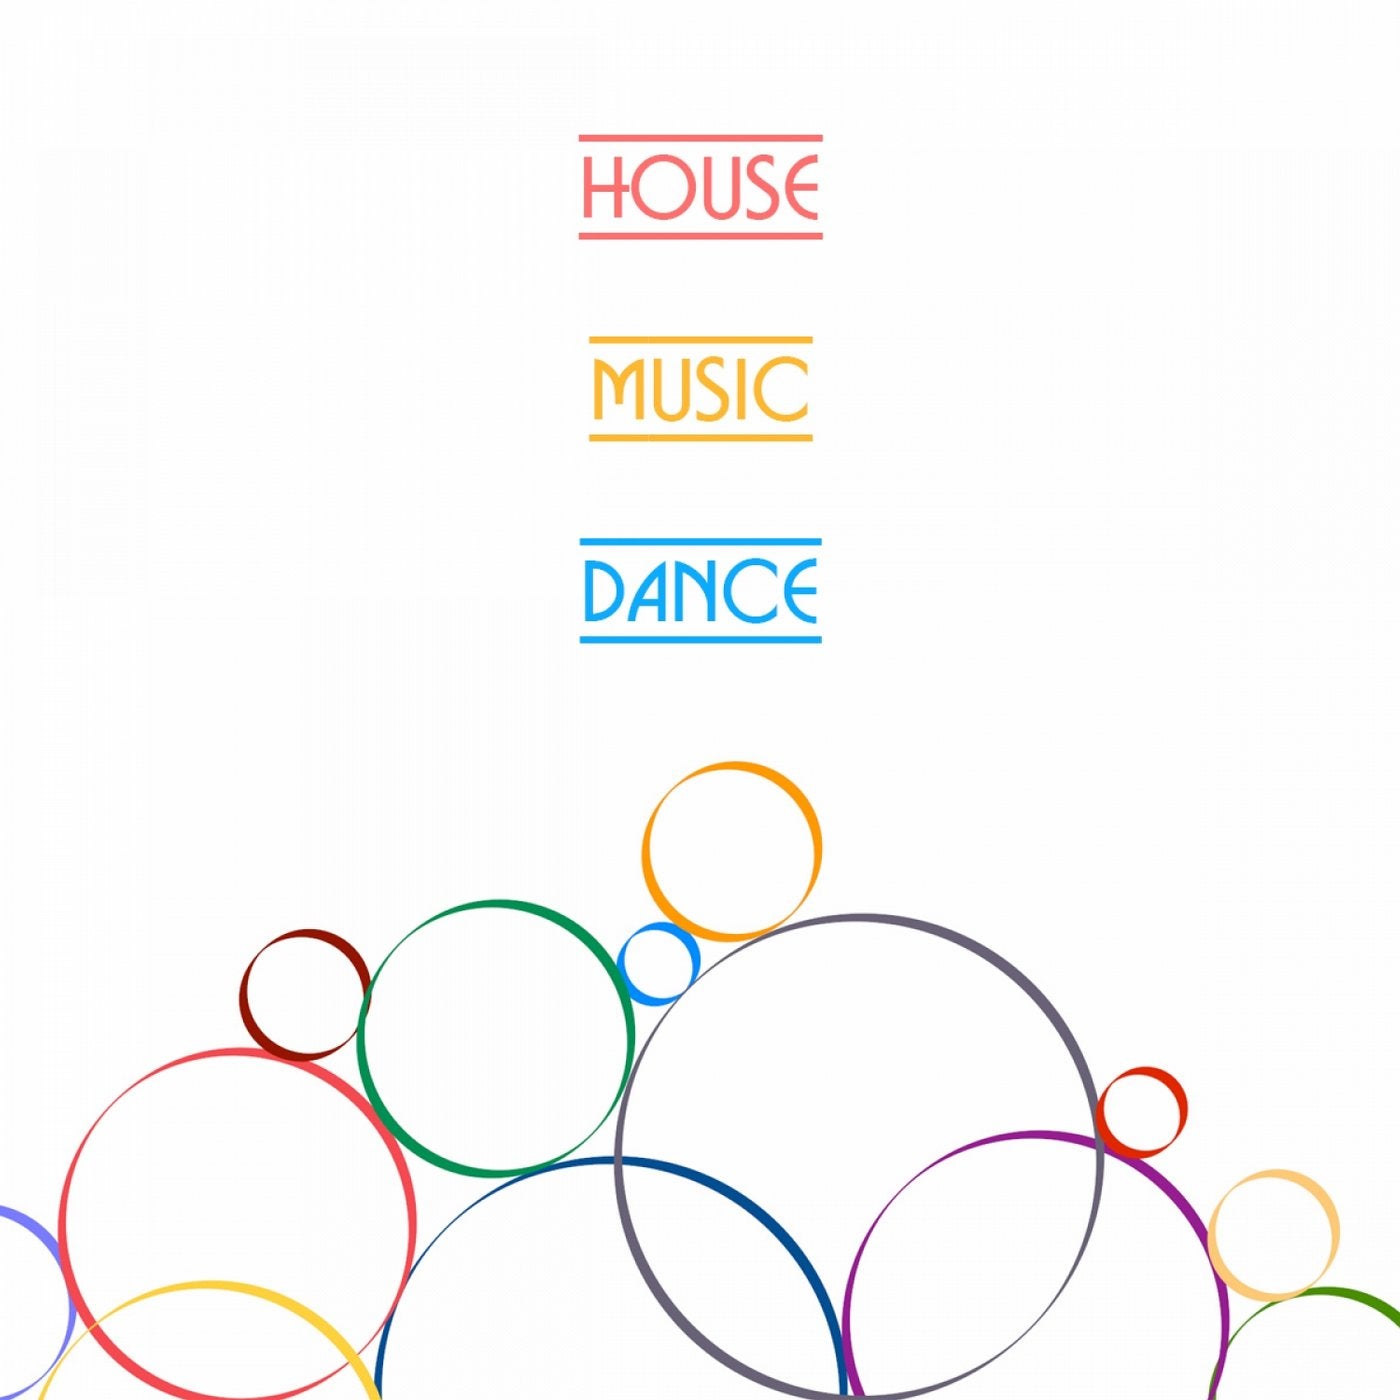 House Music & Dance